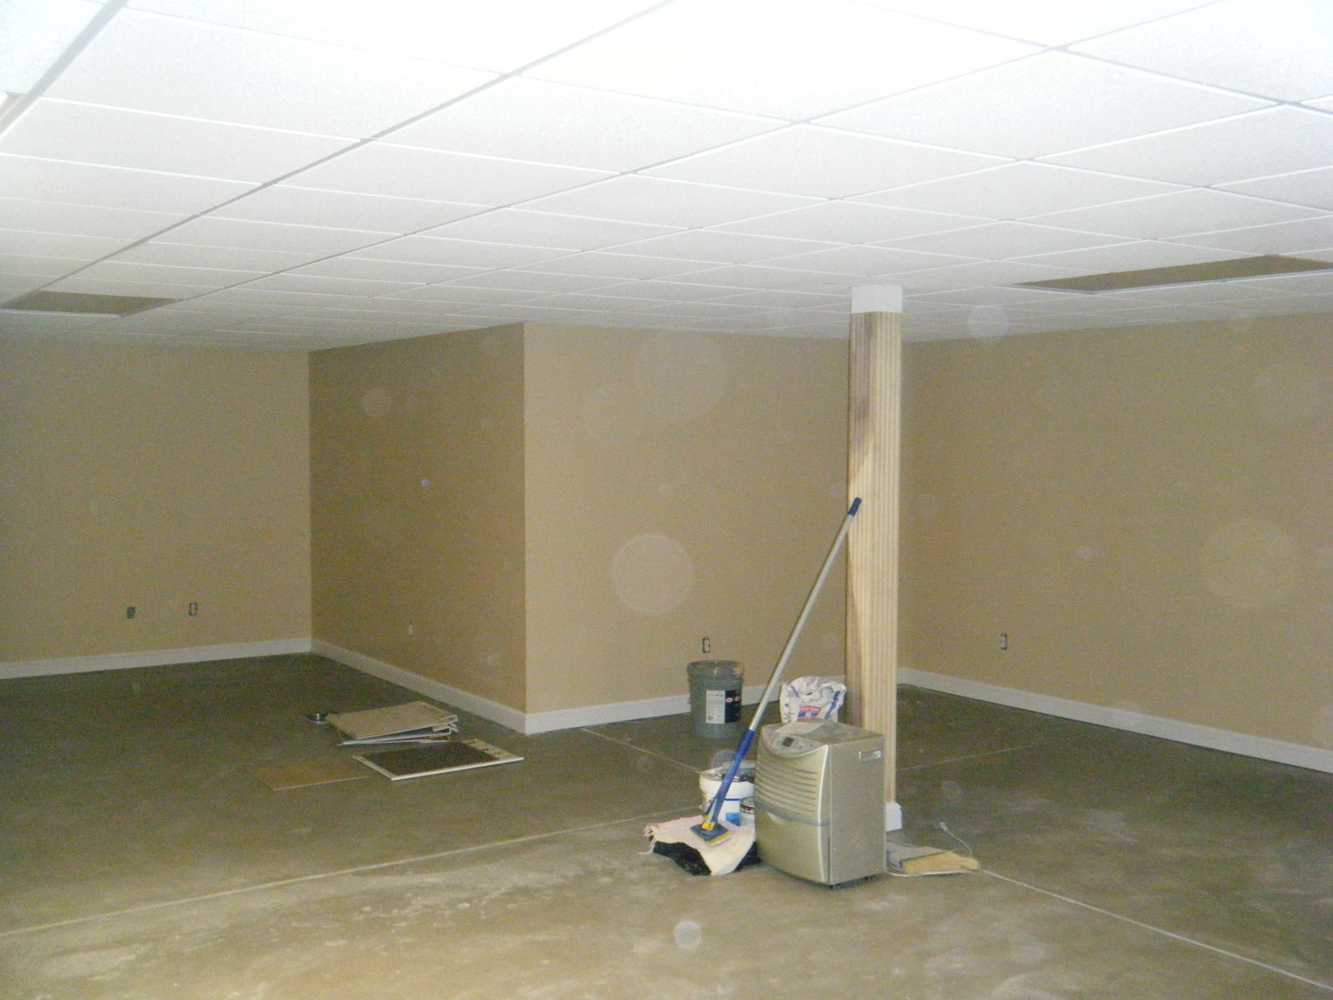 Finished basement